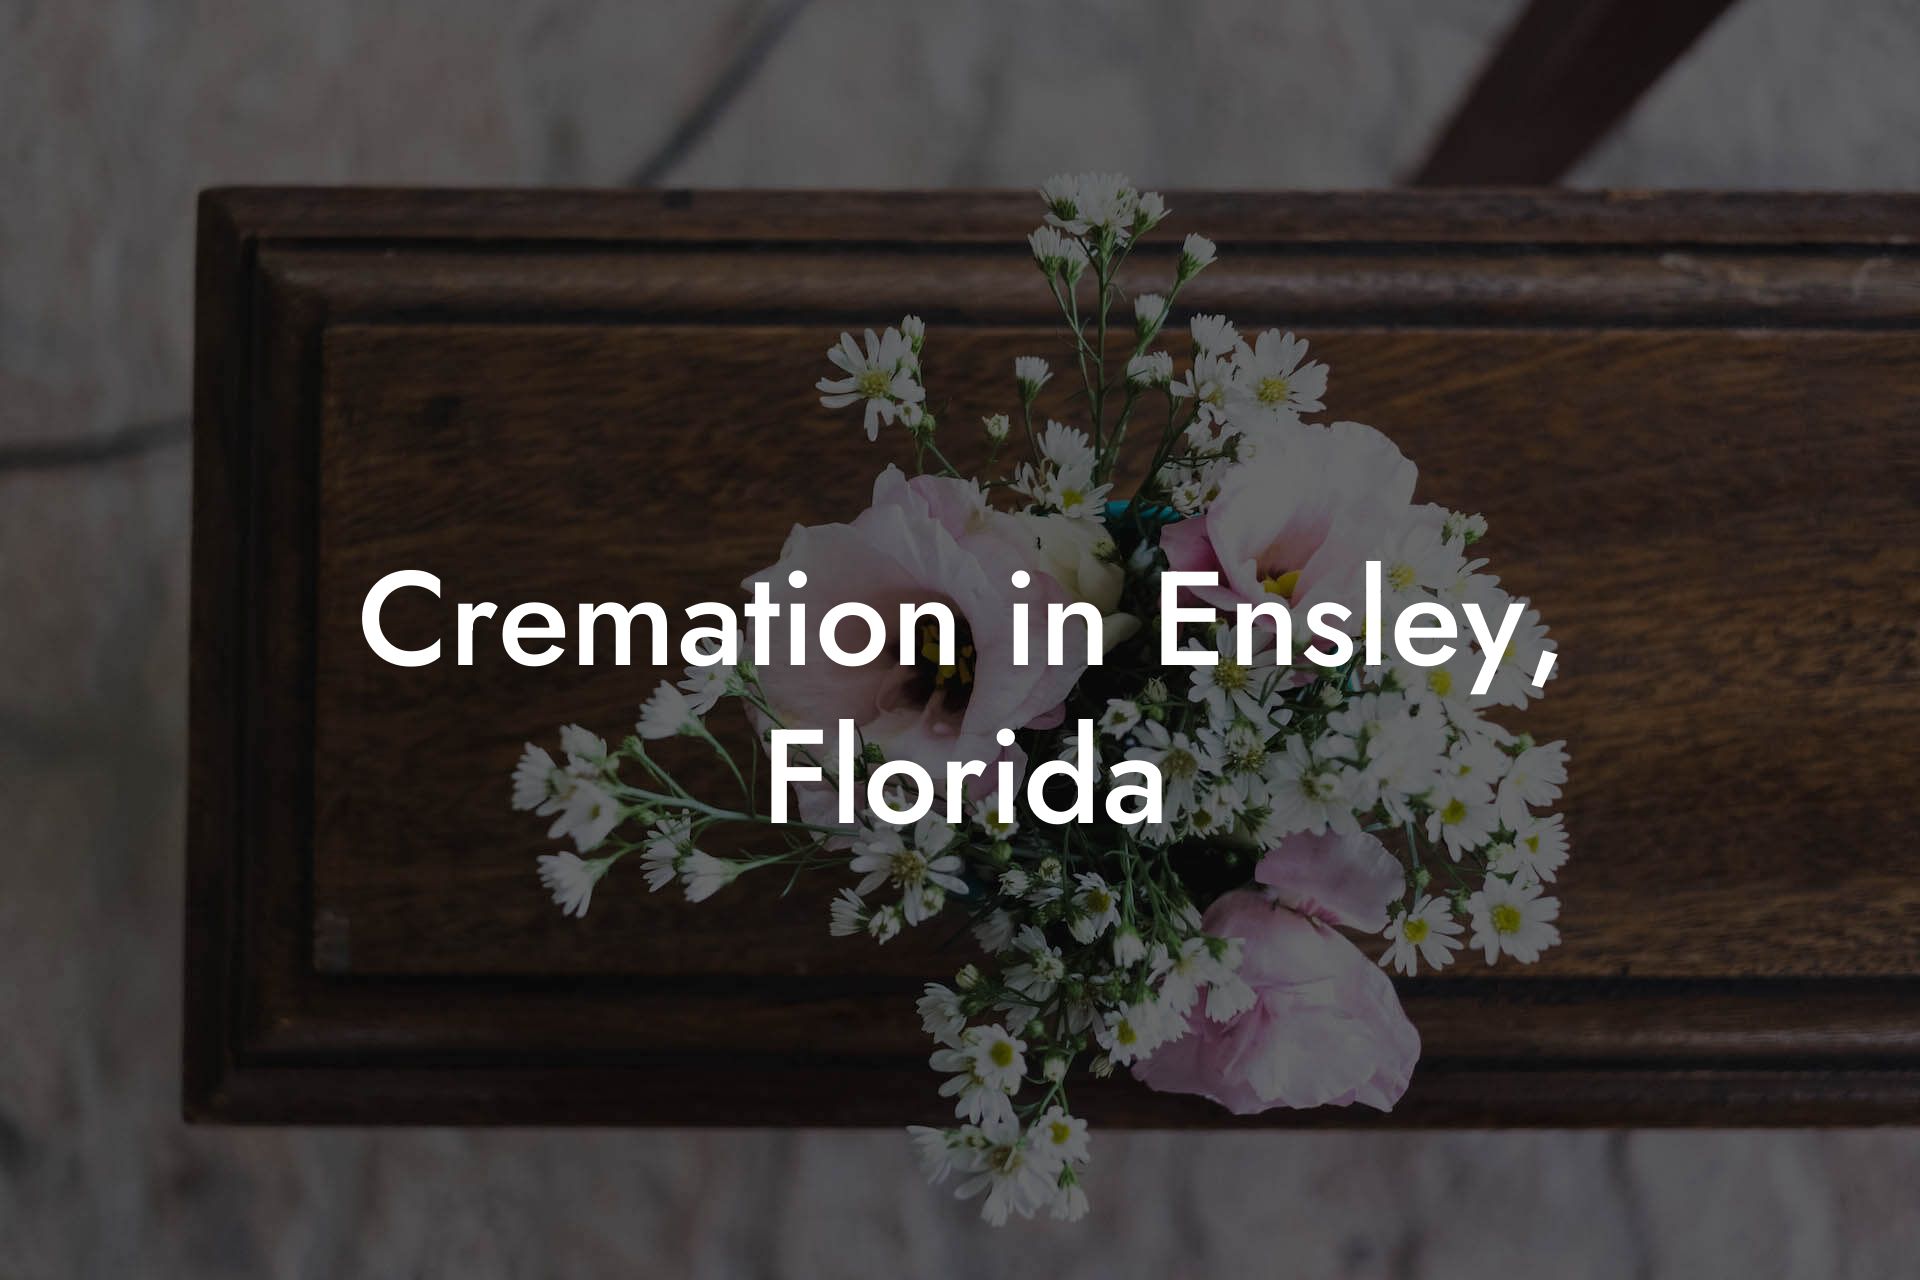 Cremation in Ensley, Florida